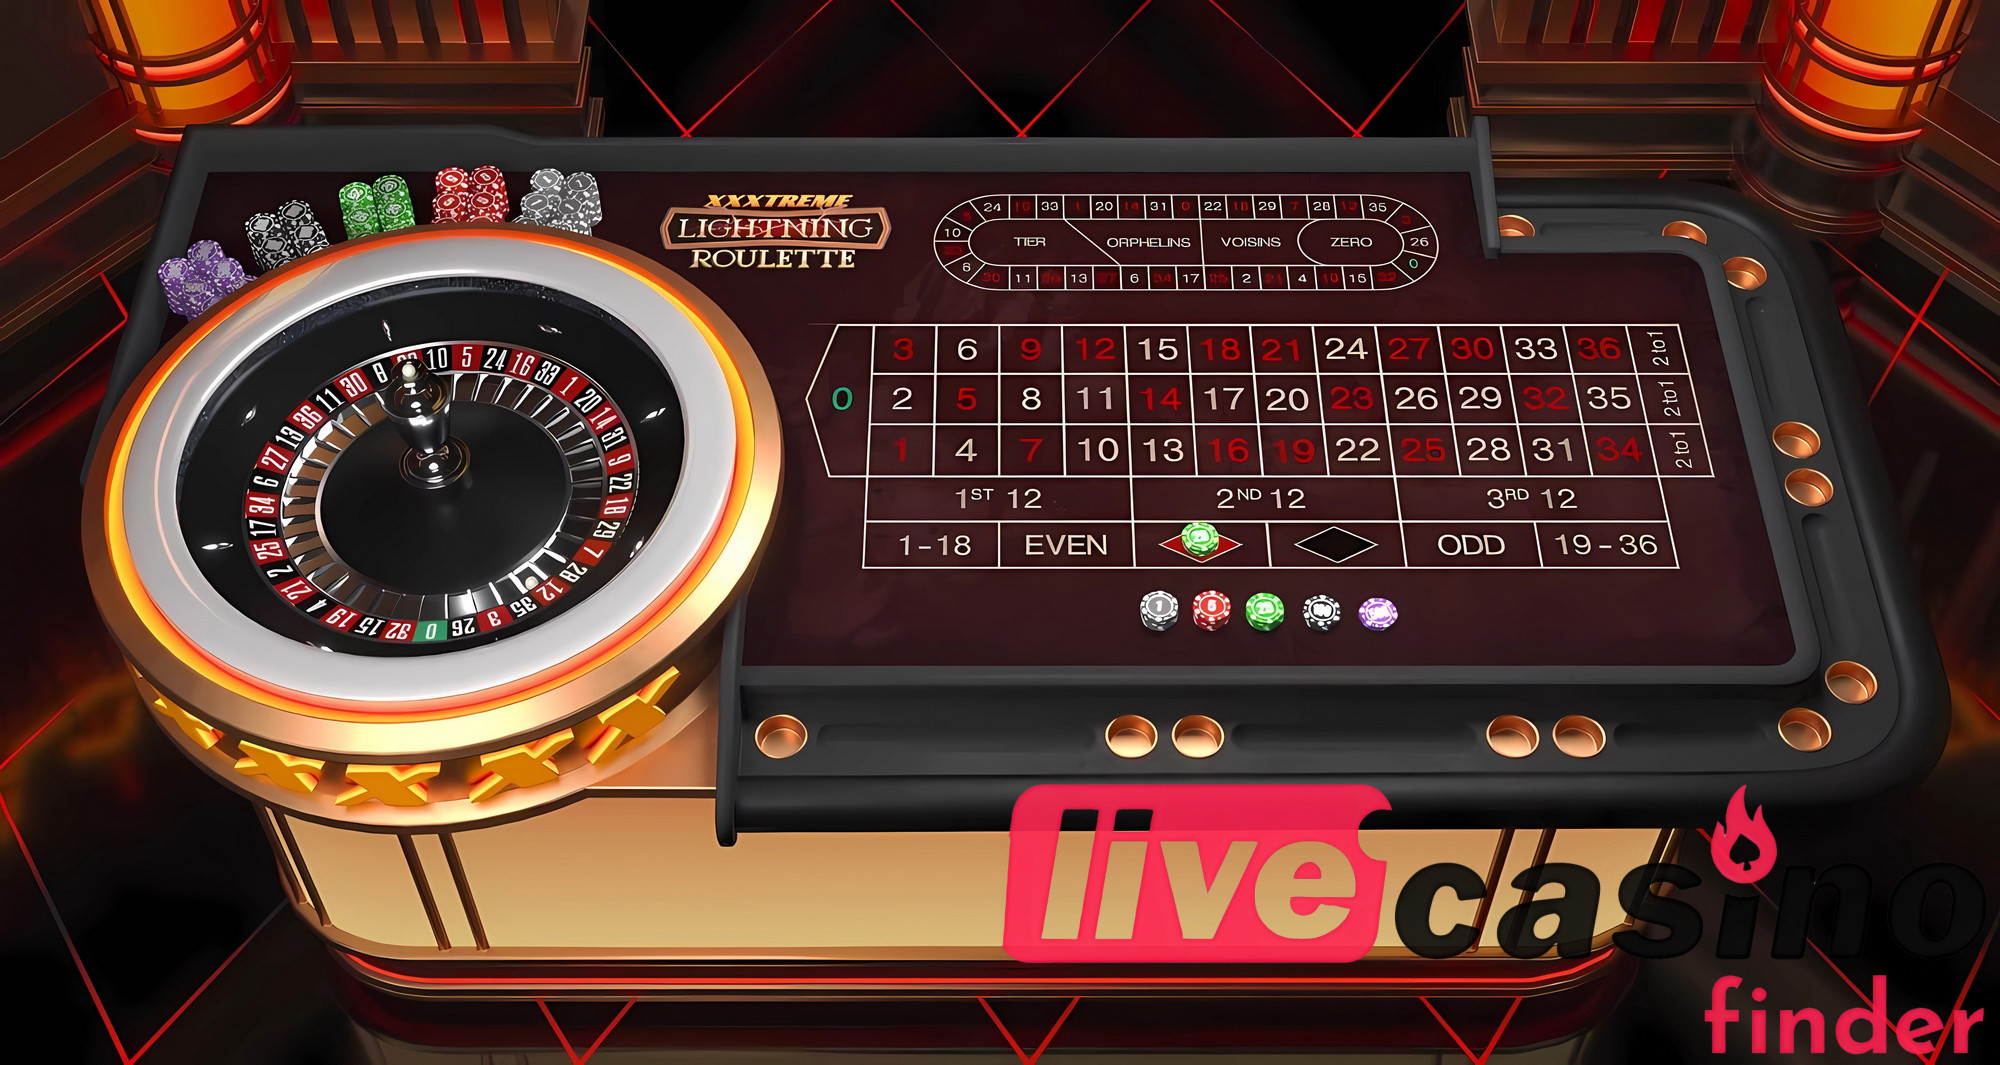 Juego de casino en vivo Xxtreme Lightning Roulette.